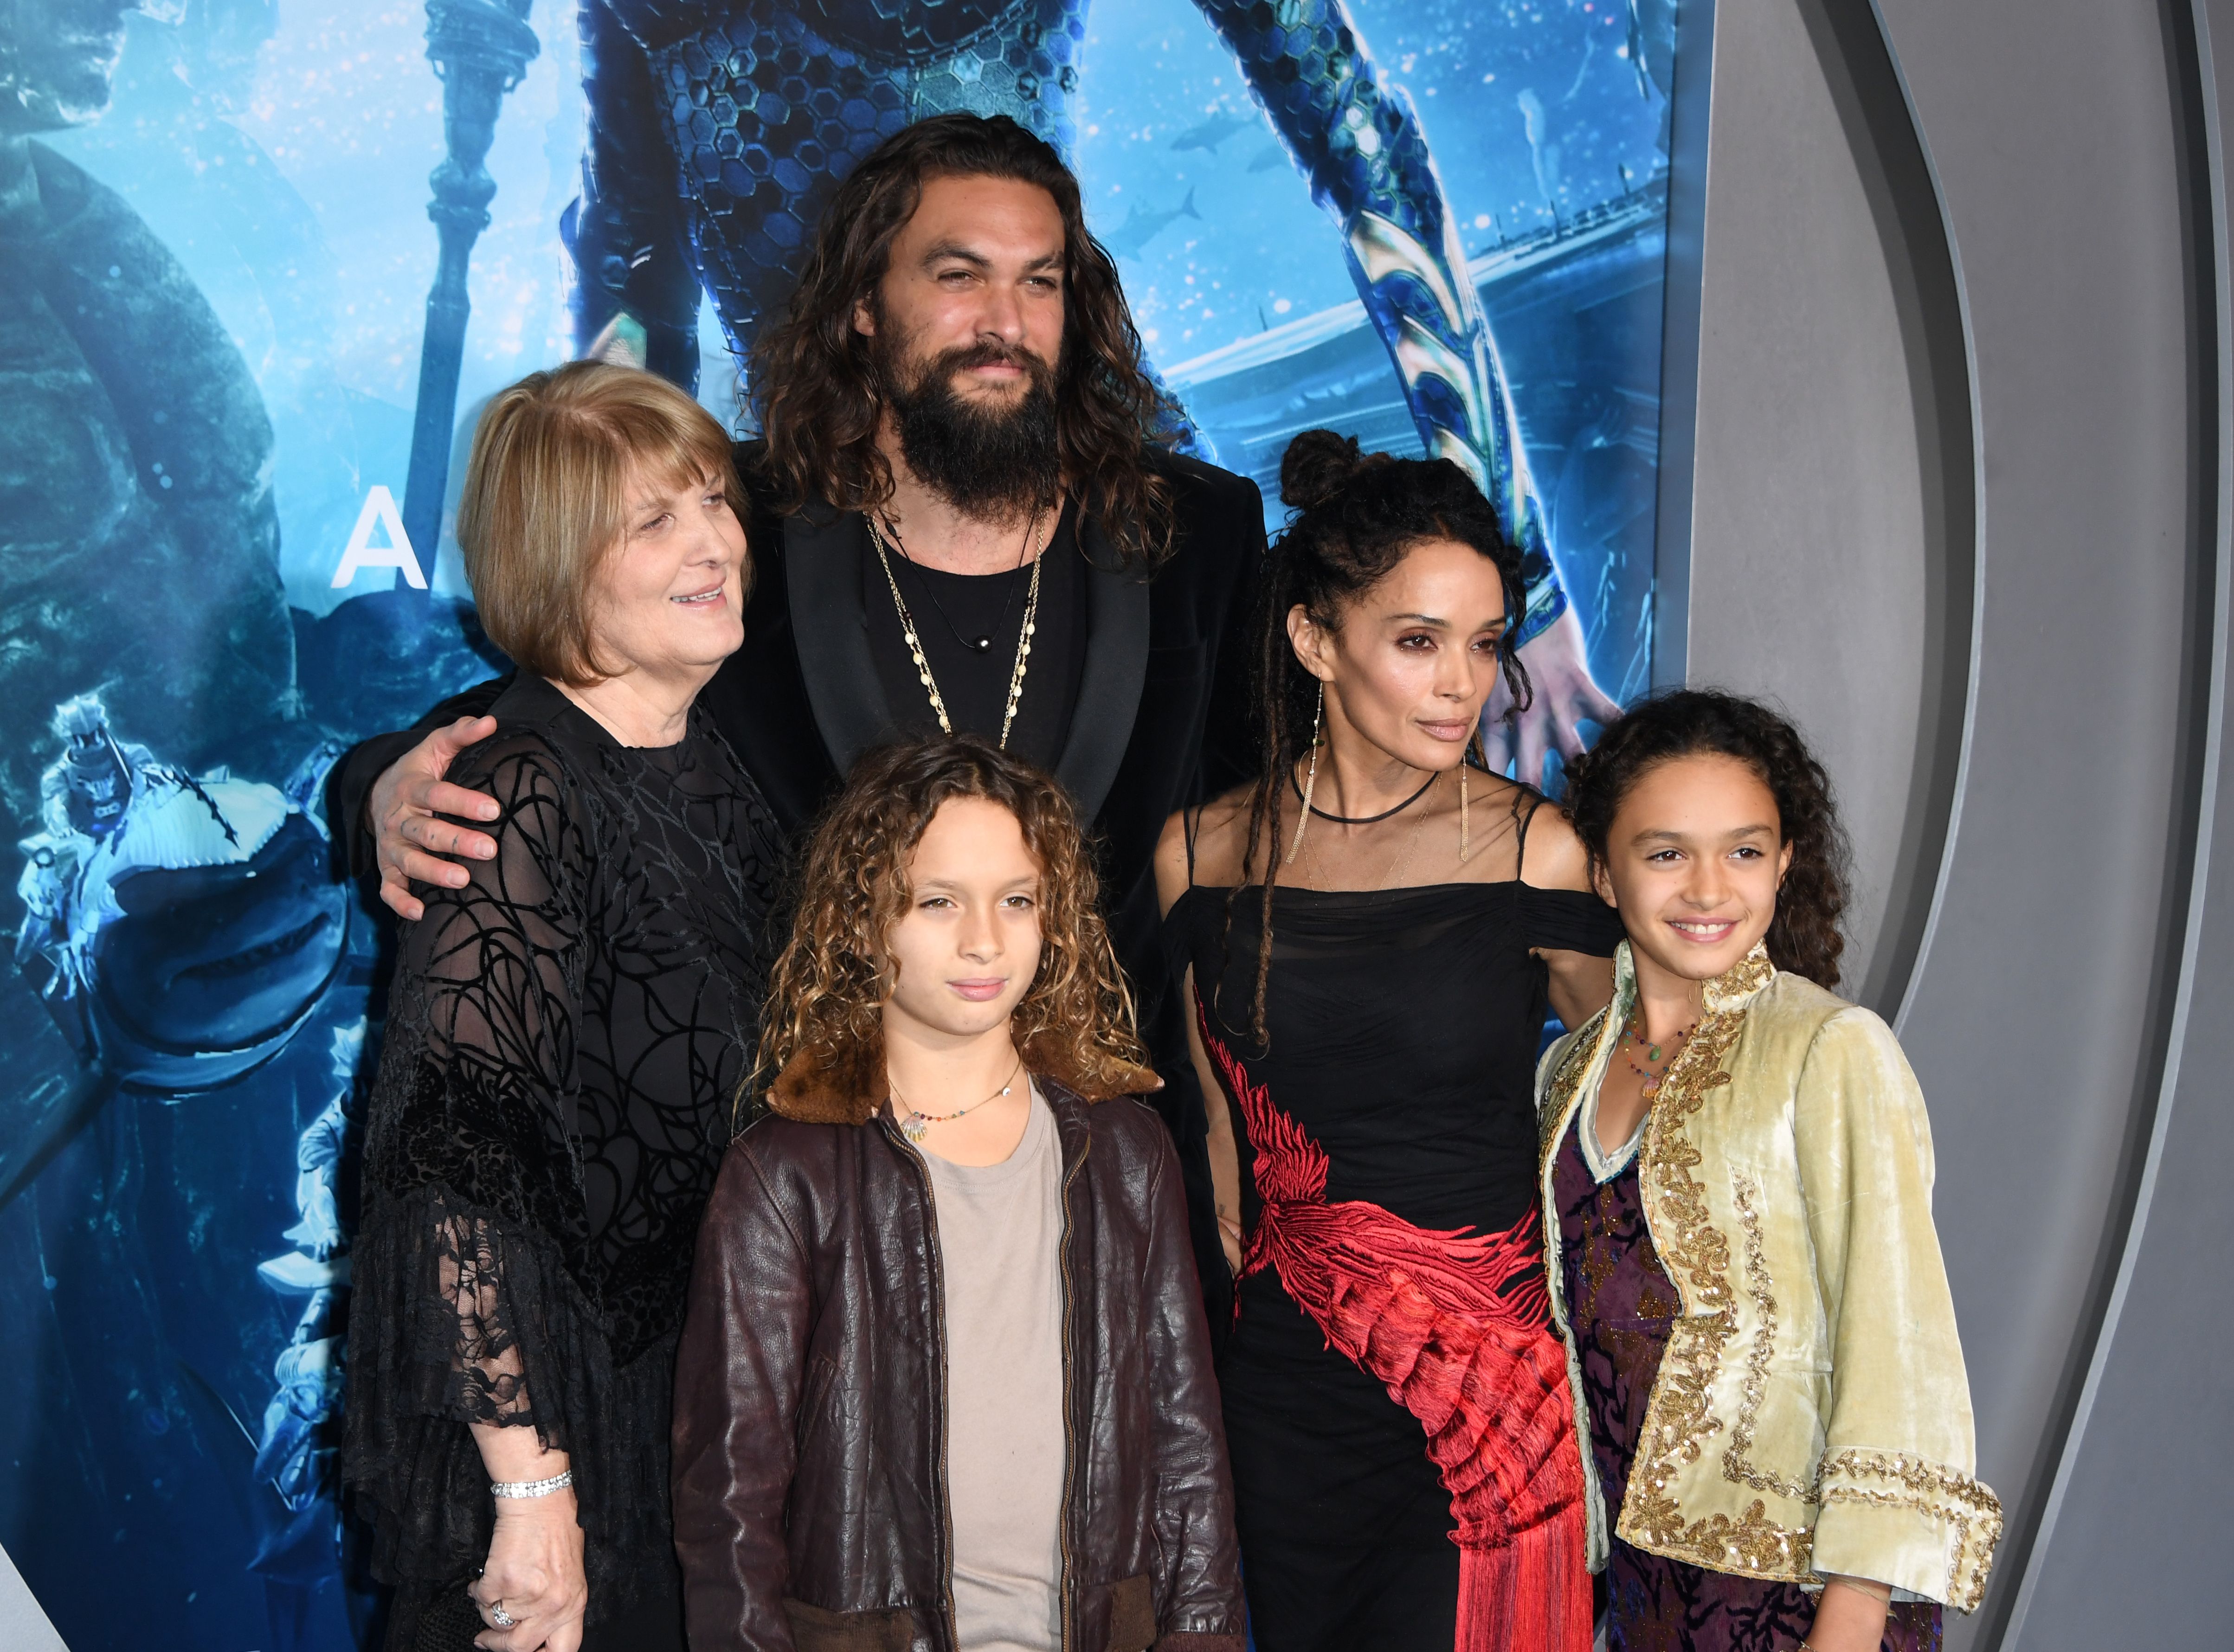 Jason Momoa, Coni Momoa, Nakoa-Wolf, Lisa Bonet, and Lola during the world premiere of "Aquaman" in Hollywood, California on December 12, 2018 | Source: Getty Images